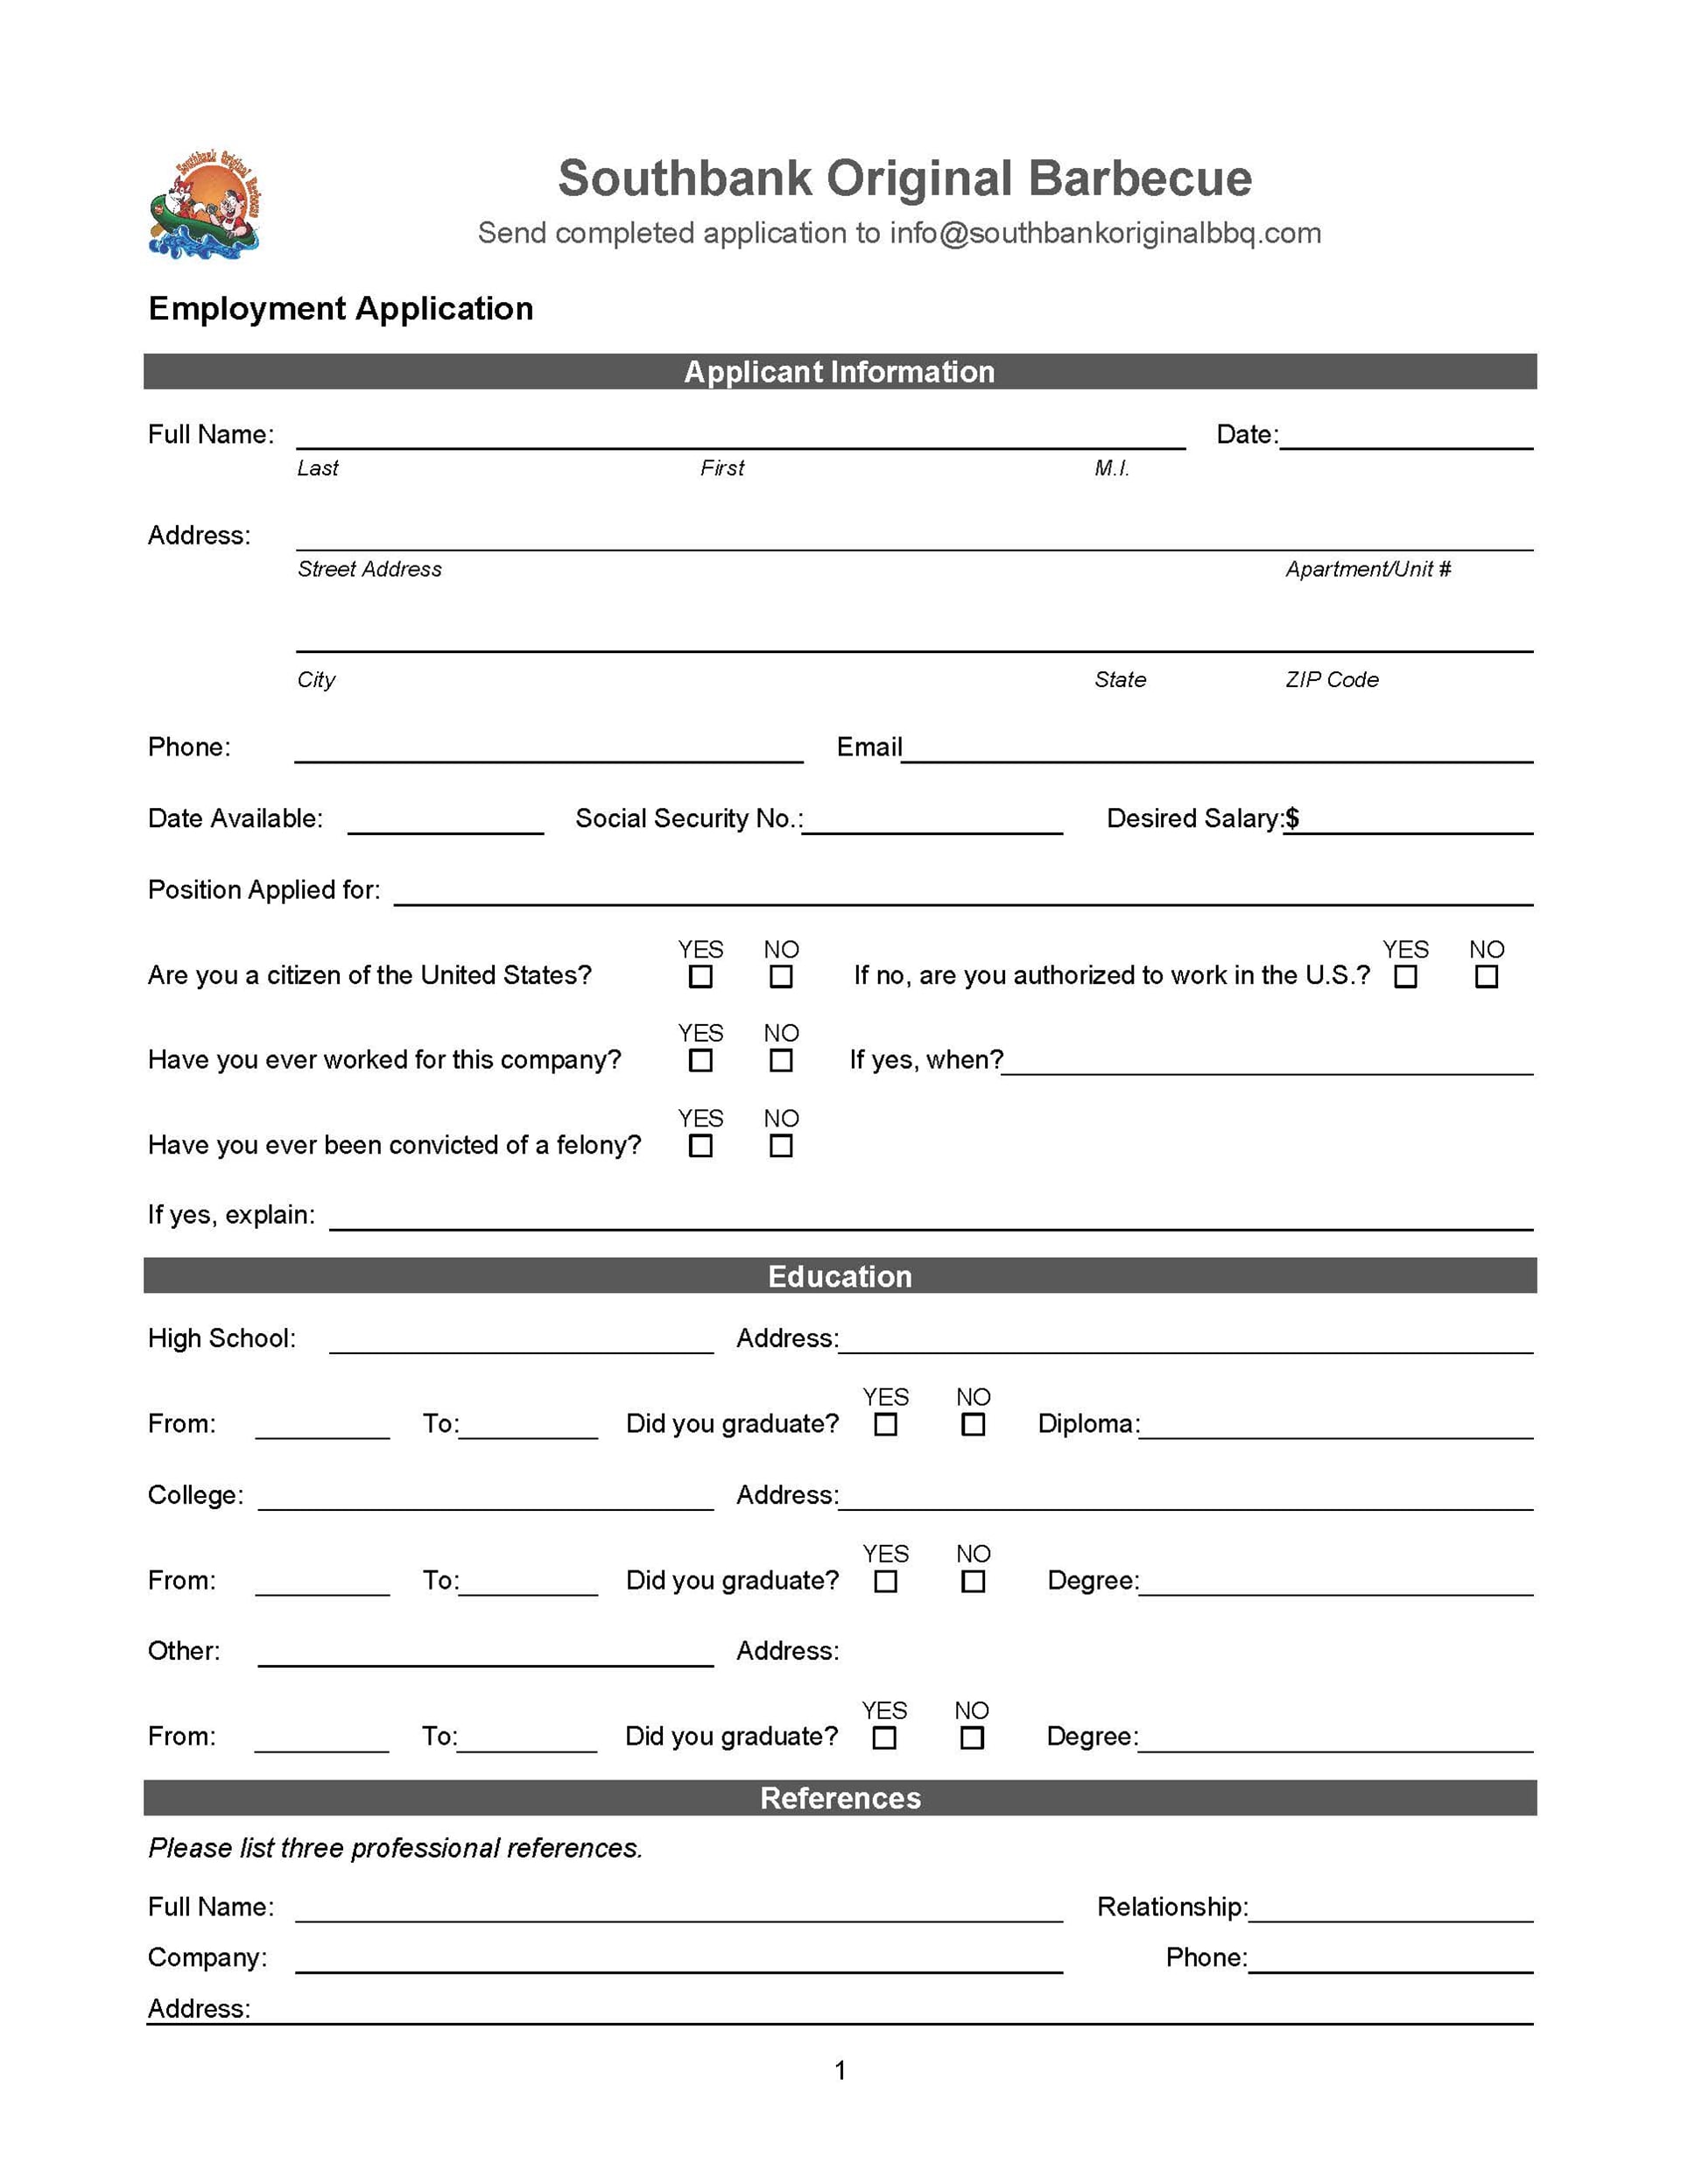 Southbank Original Barbecue, employment application